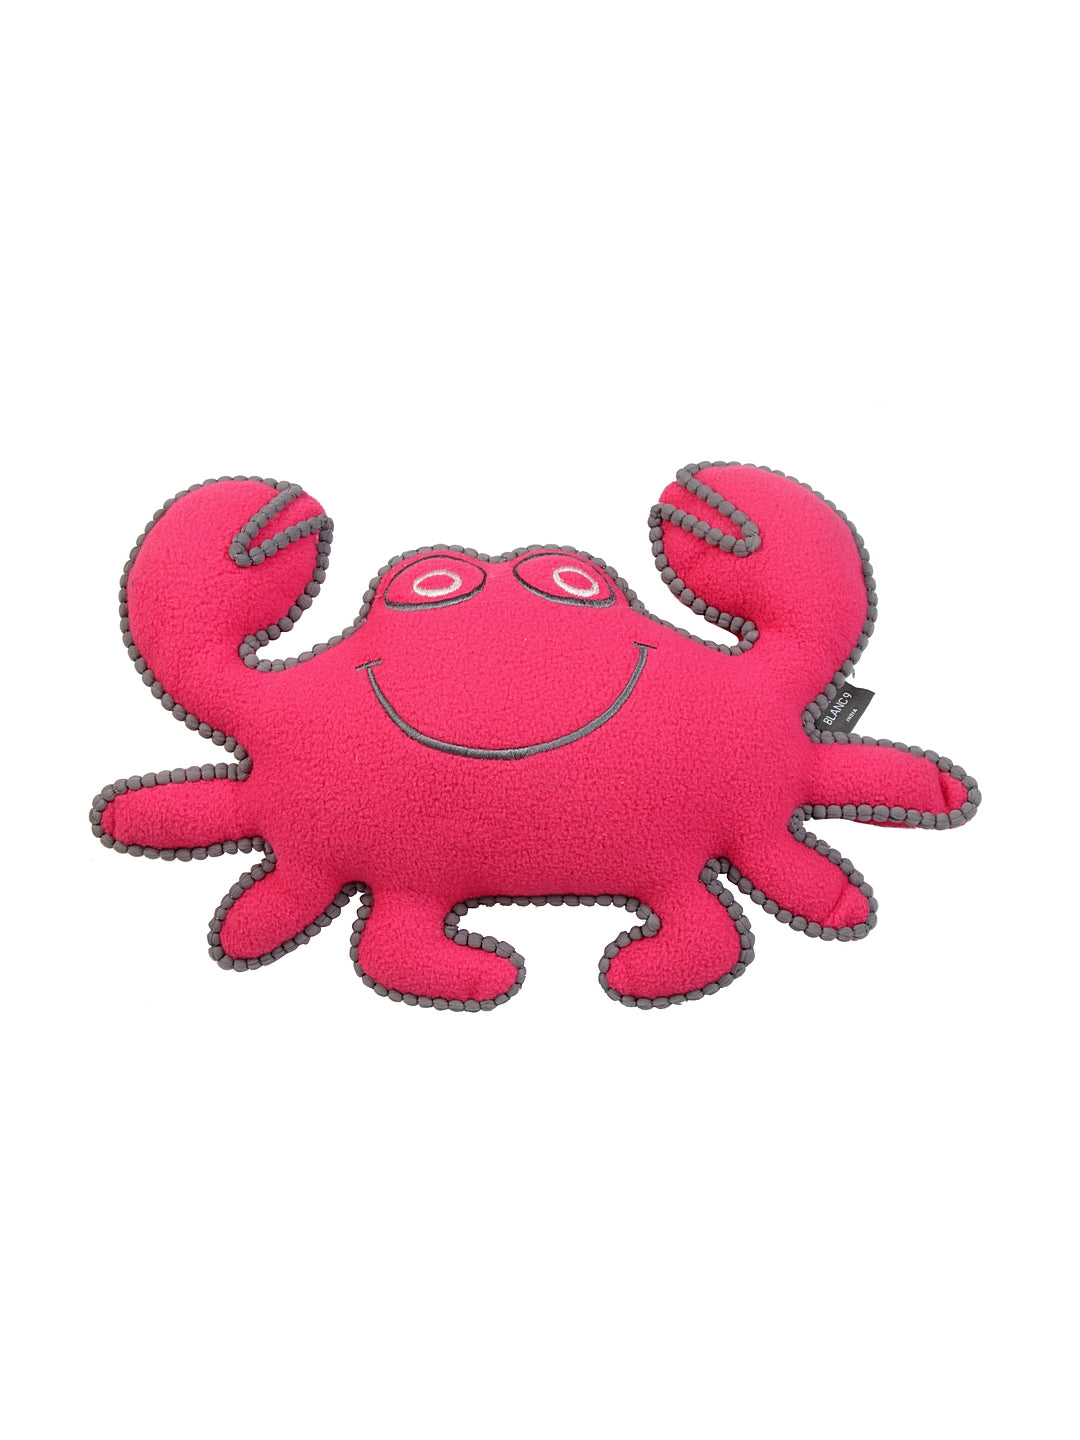 Smile Please Crab Kids Cushion